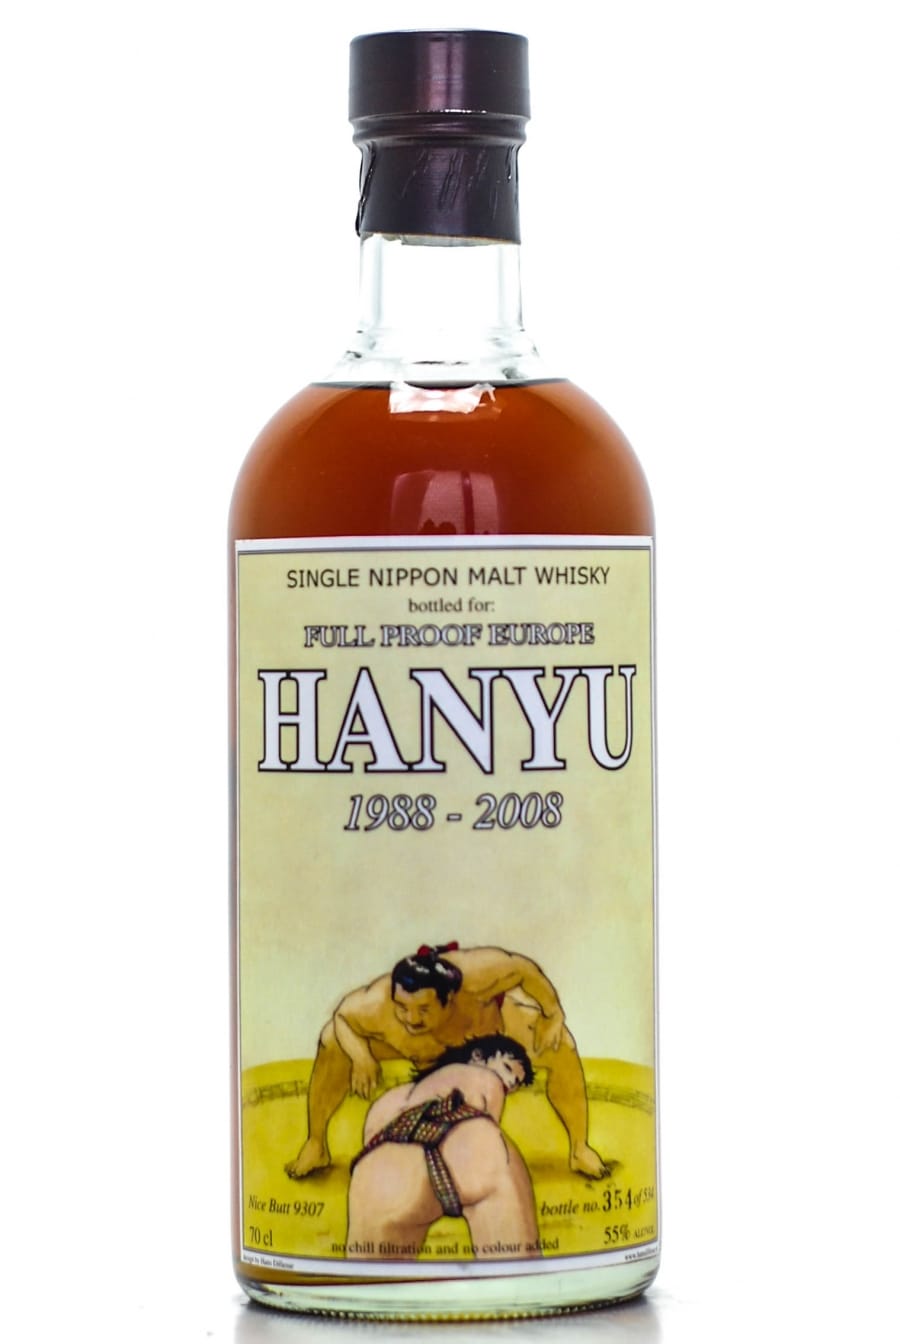 Hanyu - Hanyu 1988: Nice Butt  Single Nippon Malt Whisky Bottled Exclusively For Full Proof Cask: 9307 1 of 534 Bottles 55% 1988